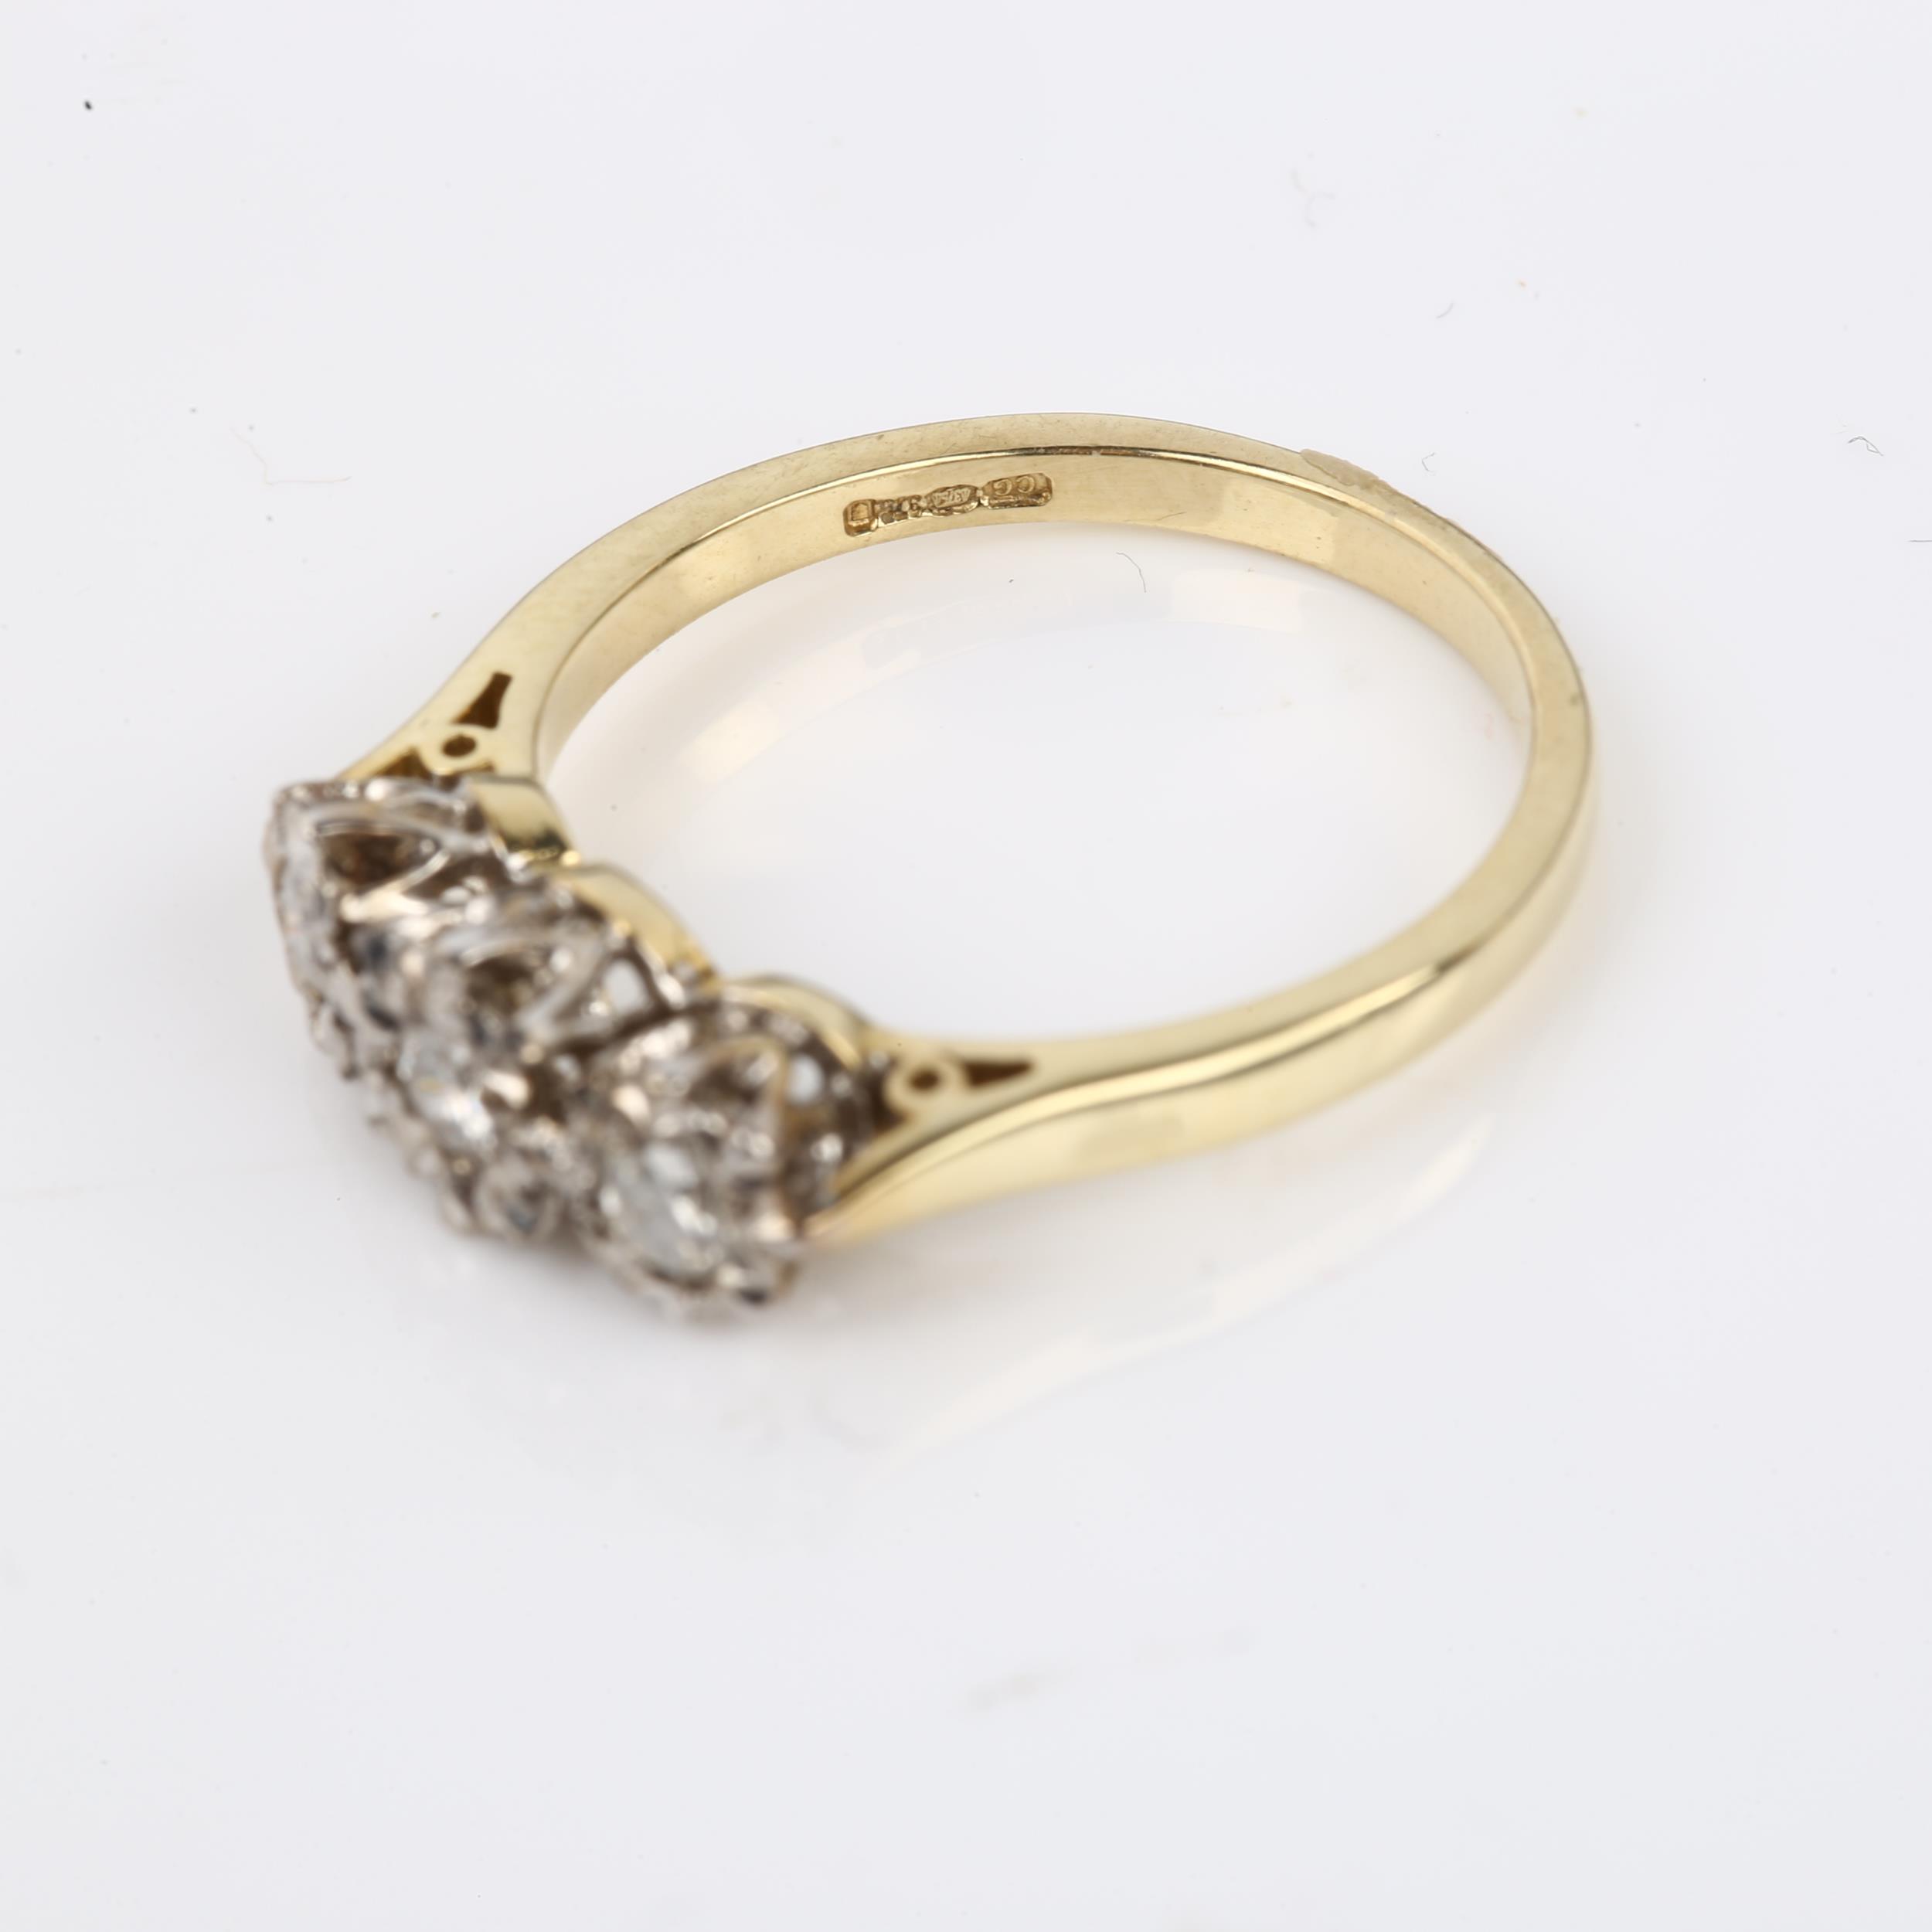 A modern 9ct gold three stone diamond ring, illusion set with modern round brilliant-cut diamonds, - Image 3 of 4